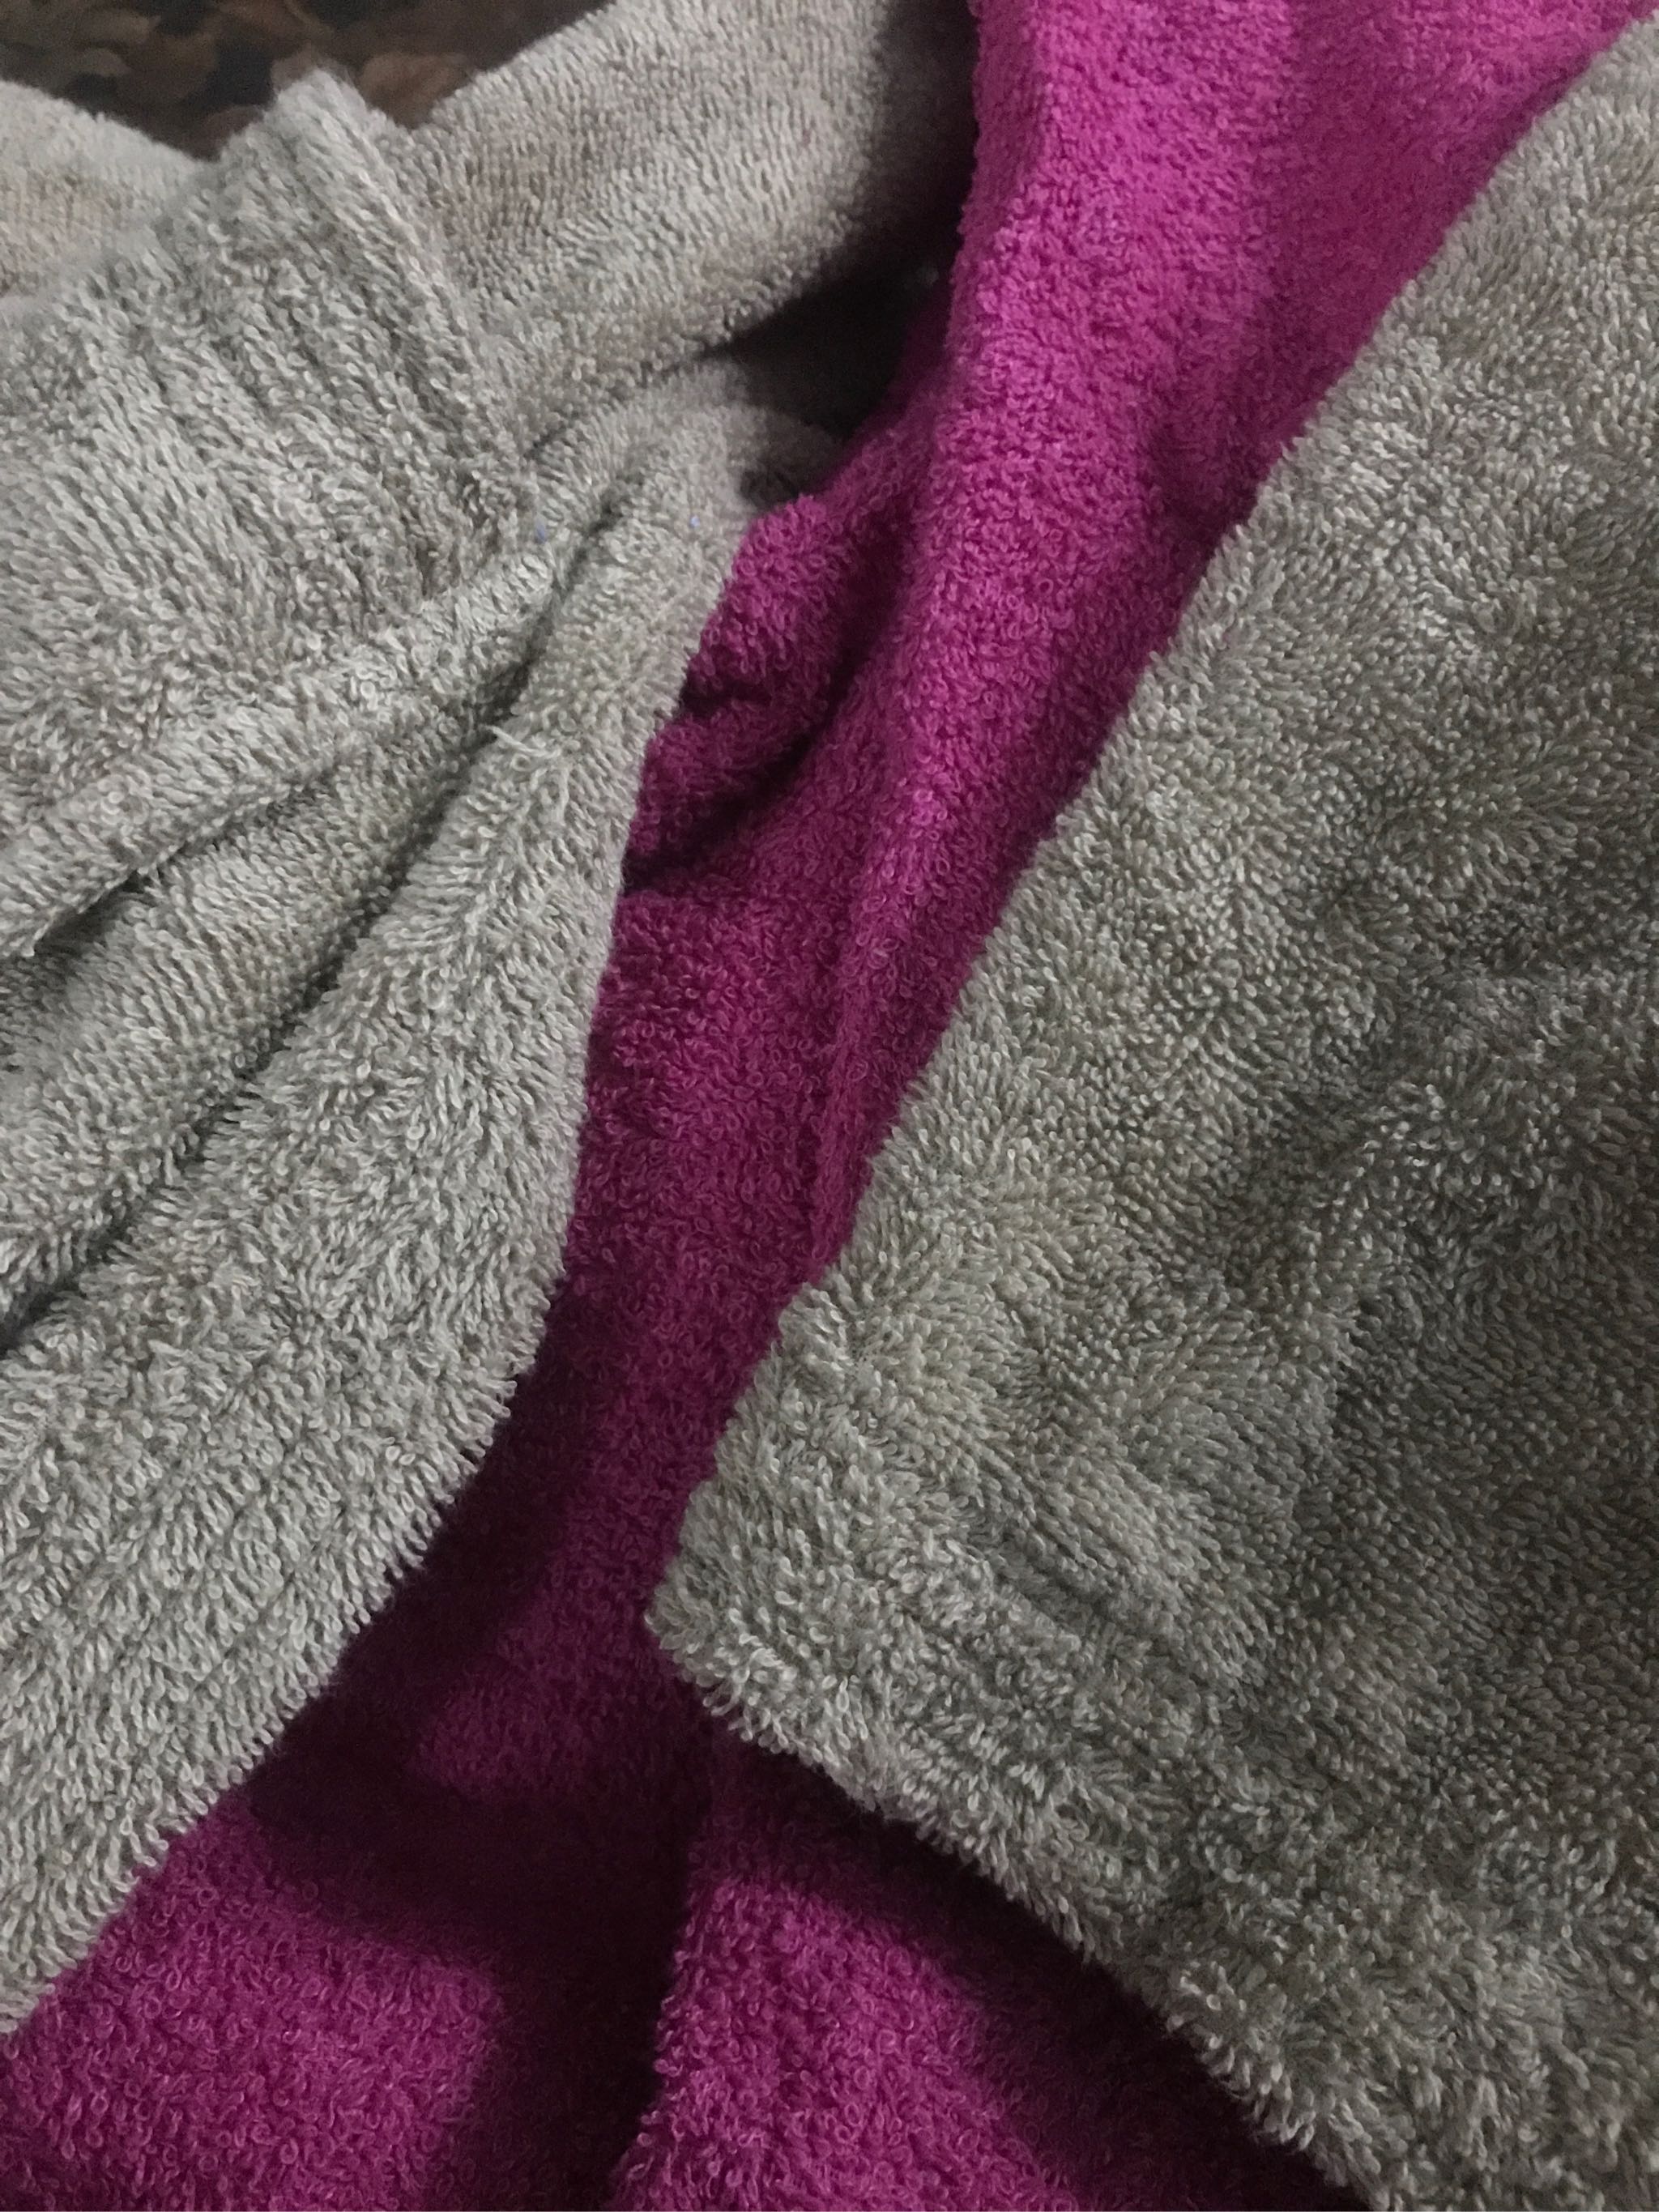 bathrobe review image gulaclassic